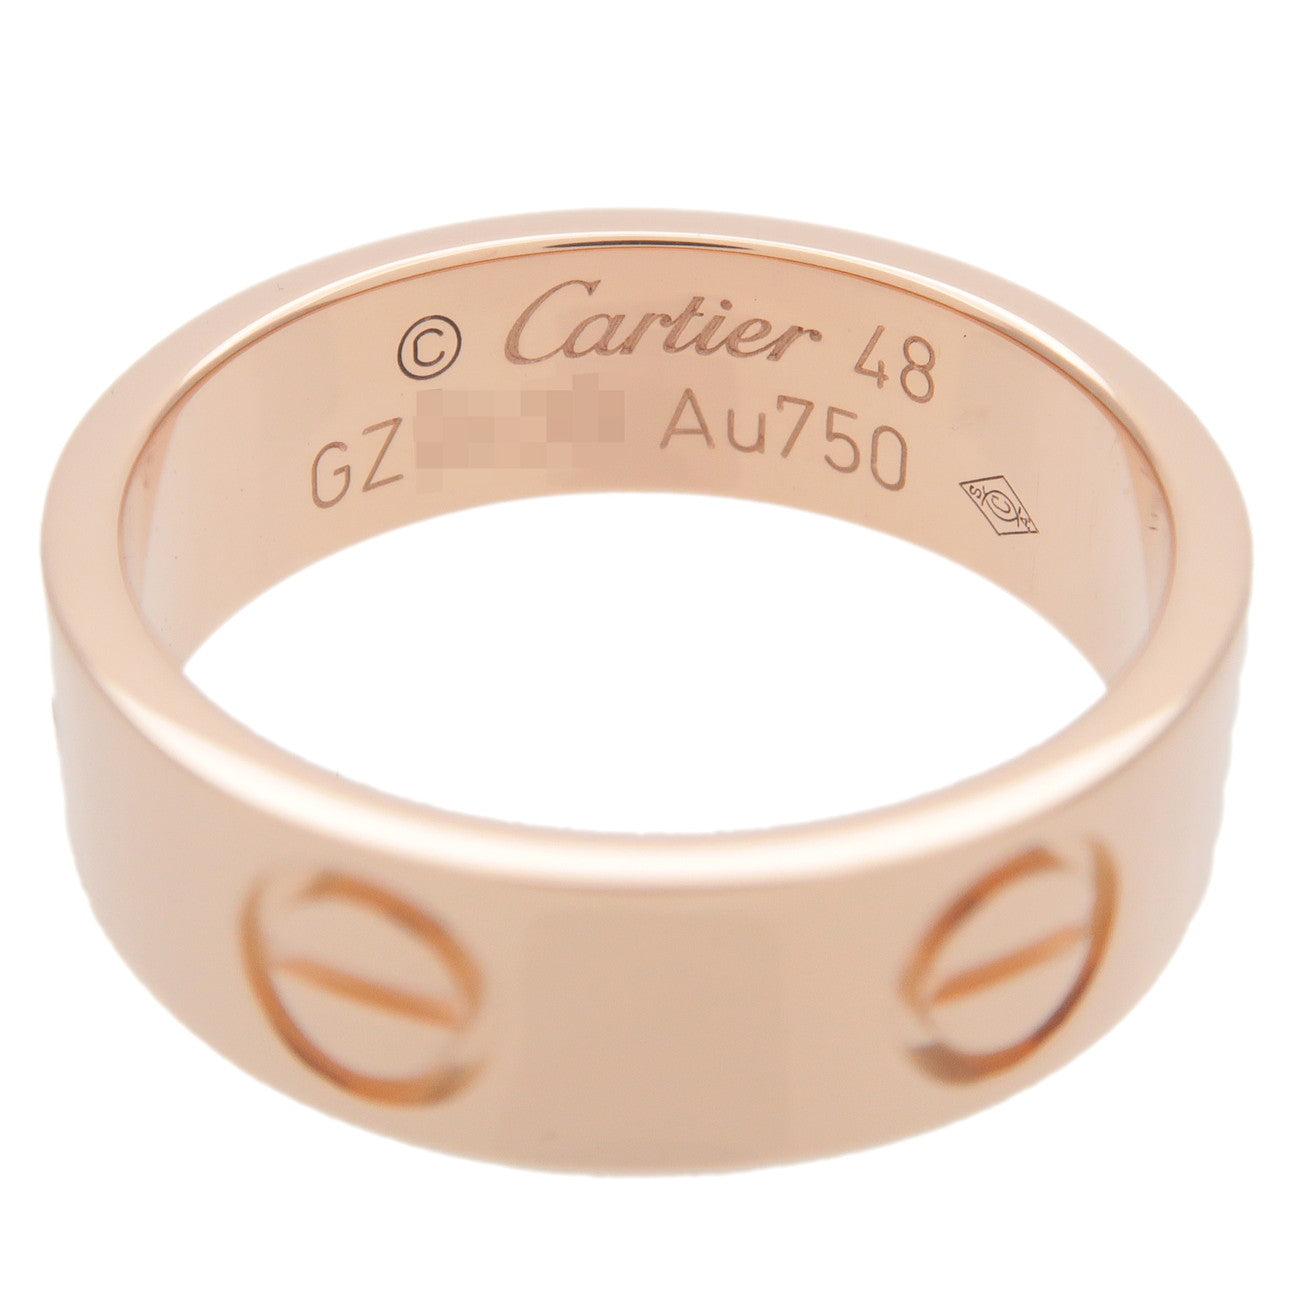 Cartier Love Ring K18PG 750 PG Rose Gold #48 US4.5-5 EU48.5